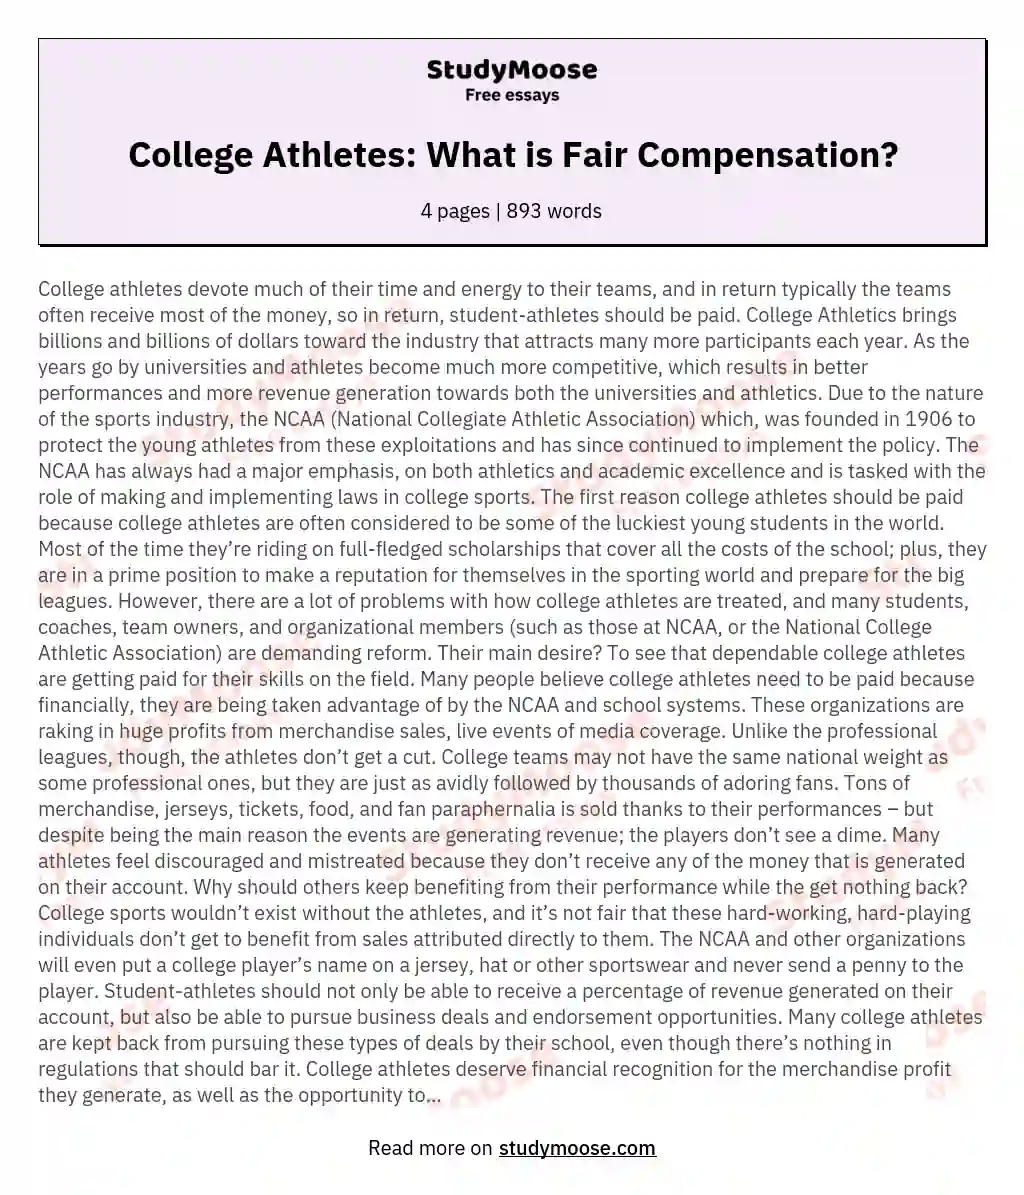 College Athletes: What is Fair Compensation? essay